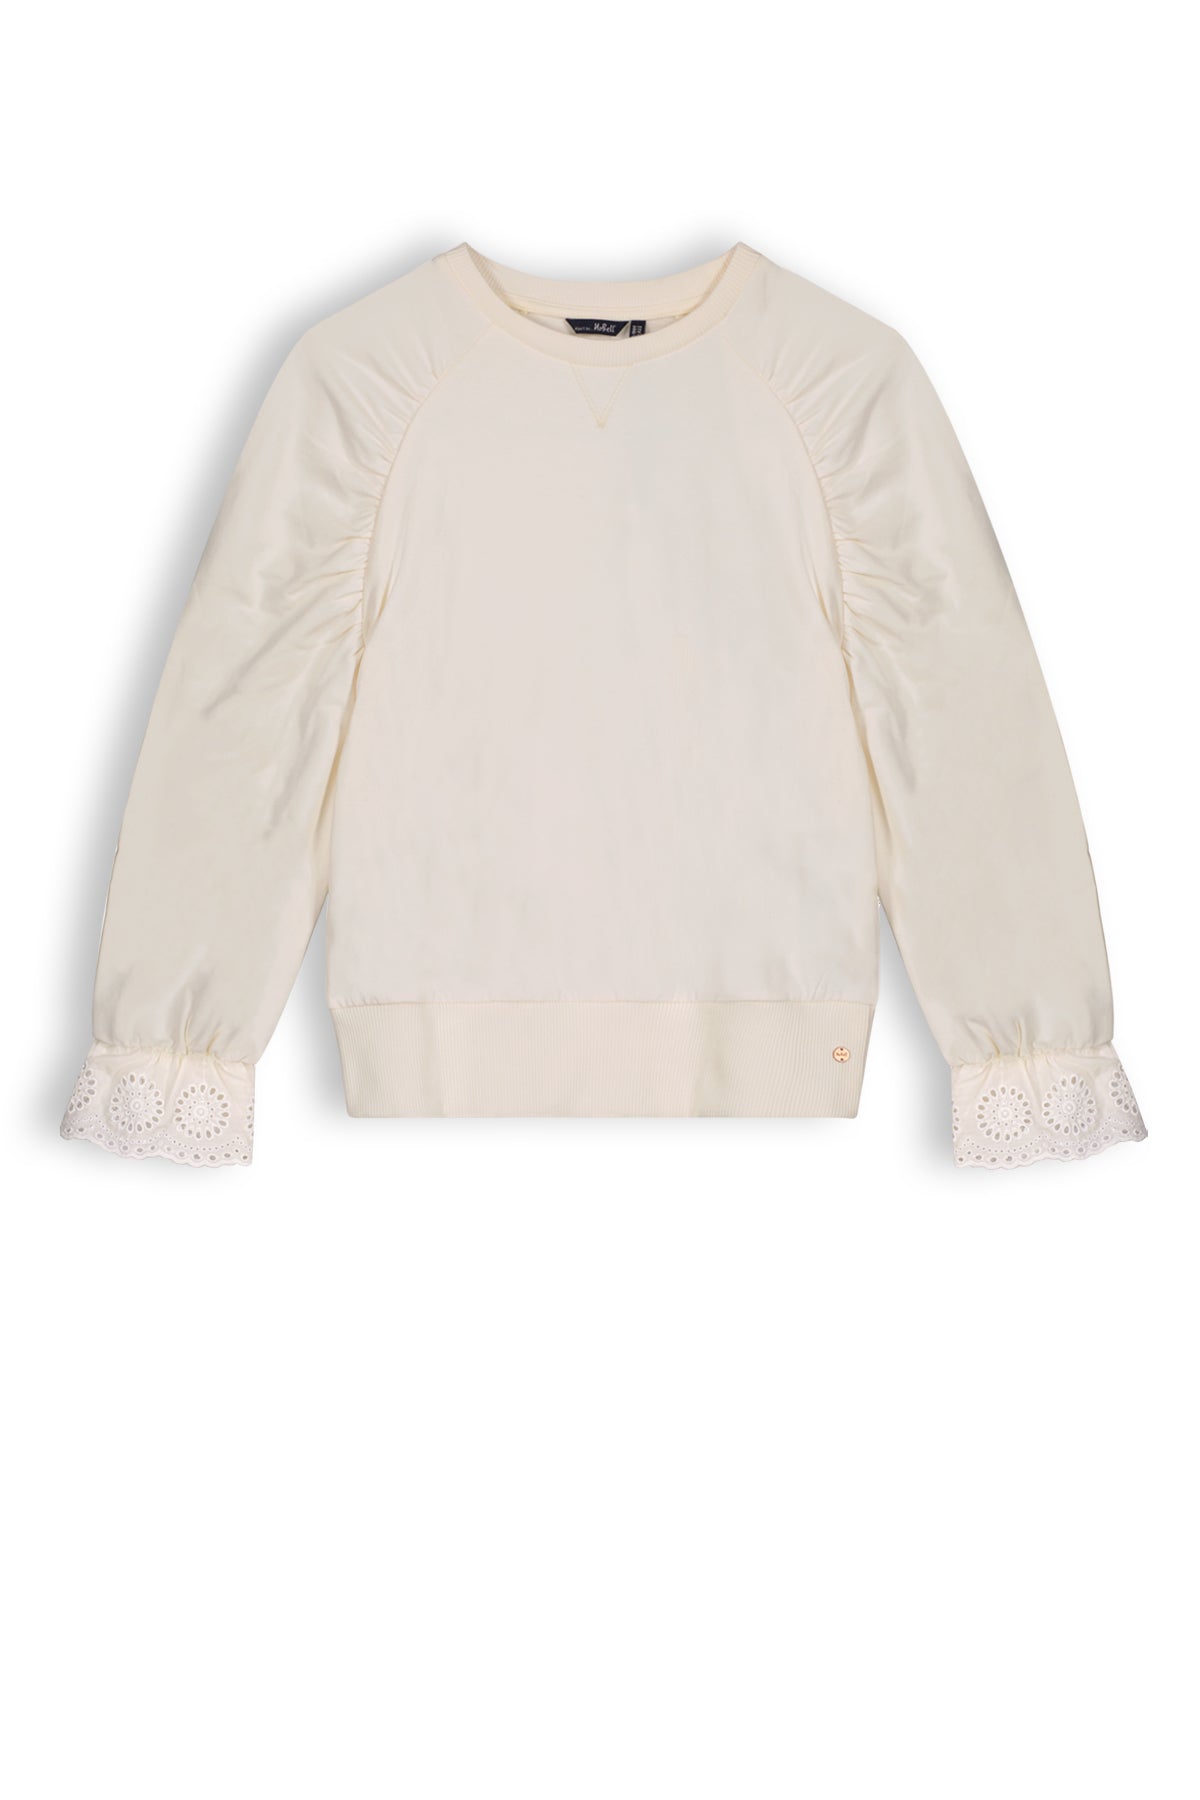 NoBell Kim girls sweater with gathered raglan sleeves ivory